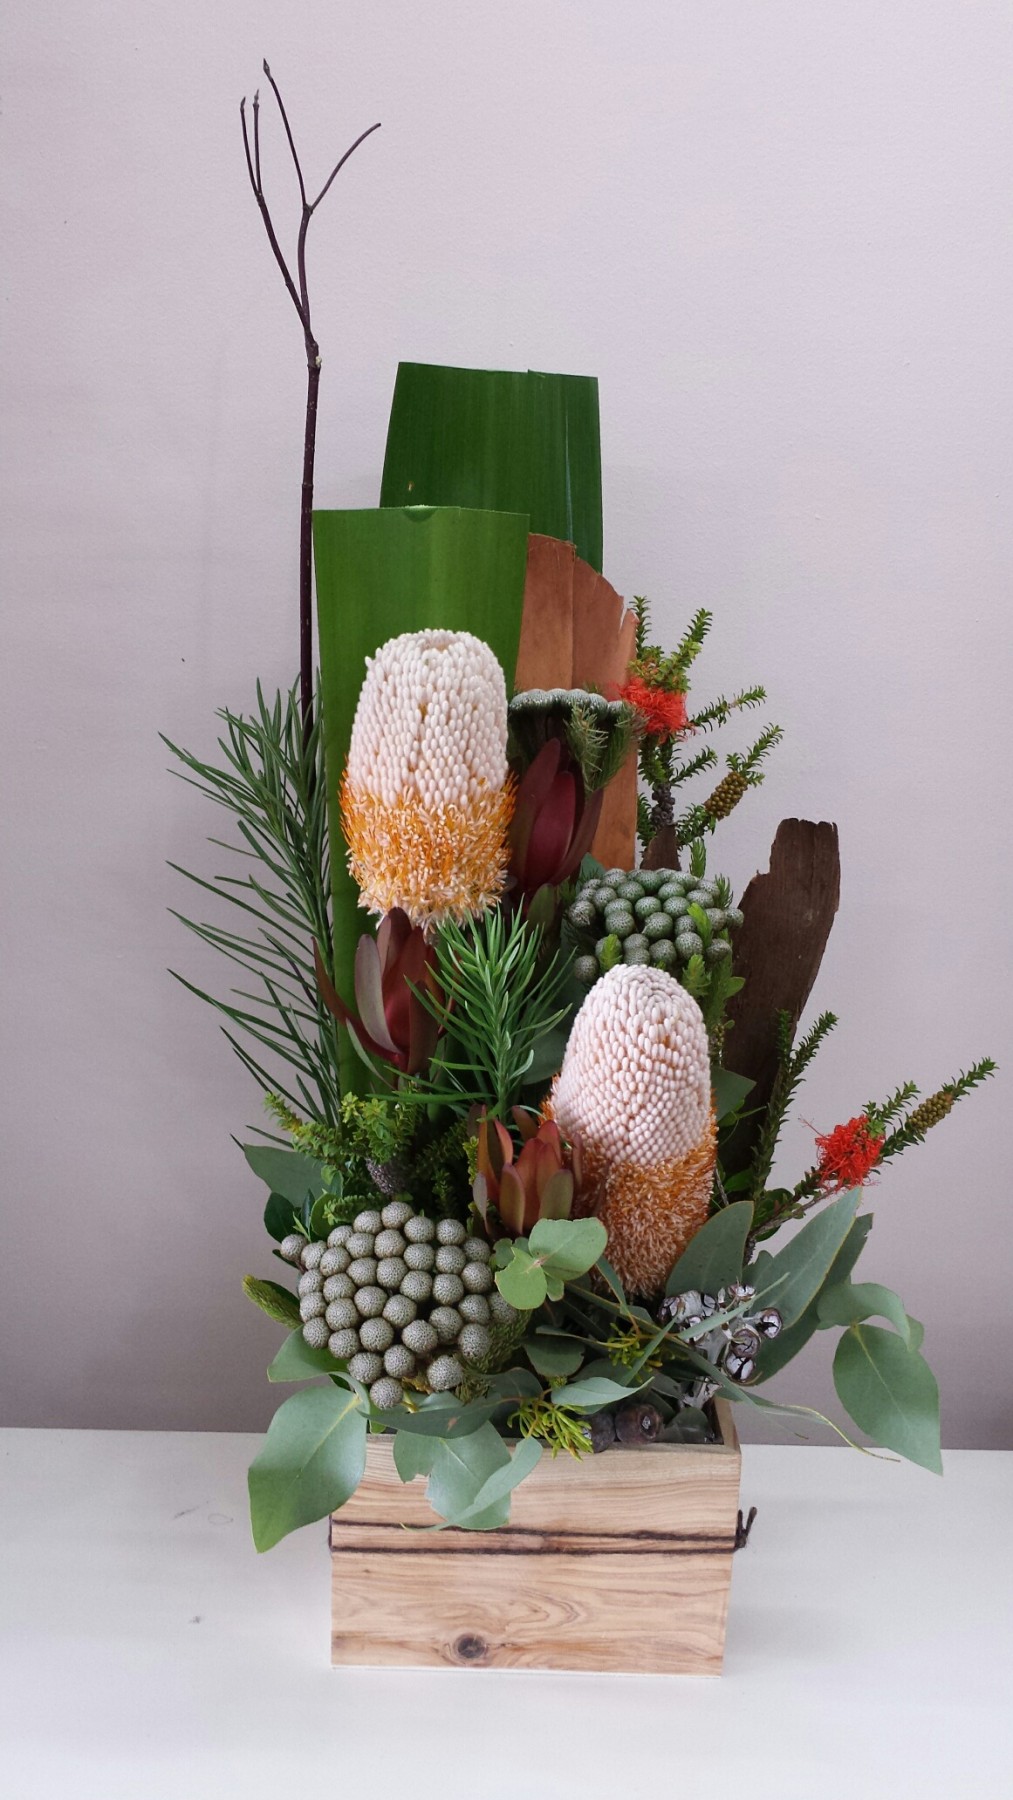 Mix of seasonal native flowers arranged in a wood box